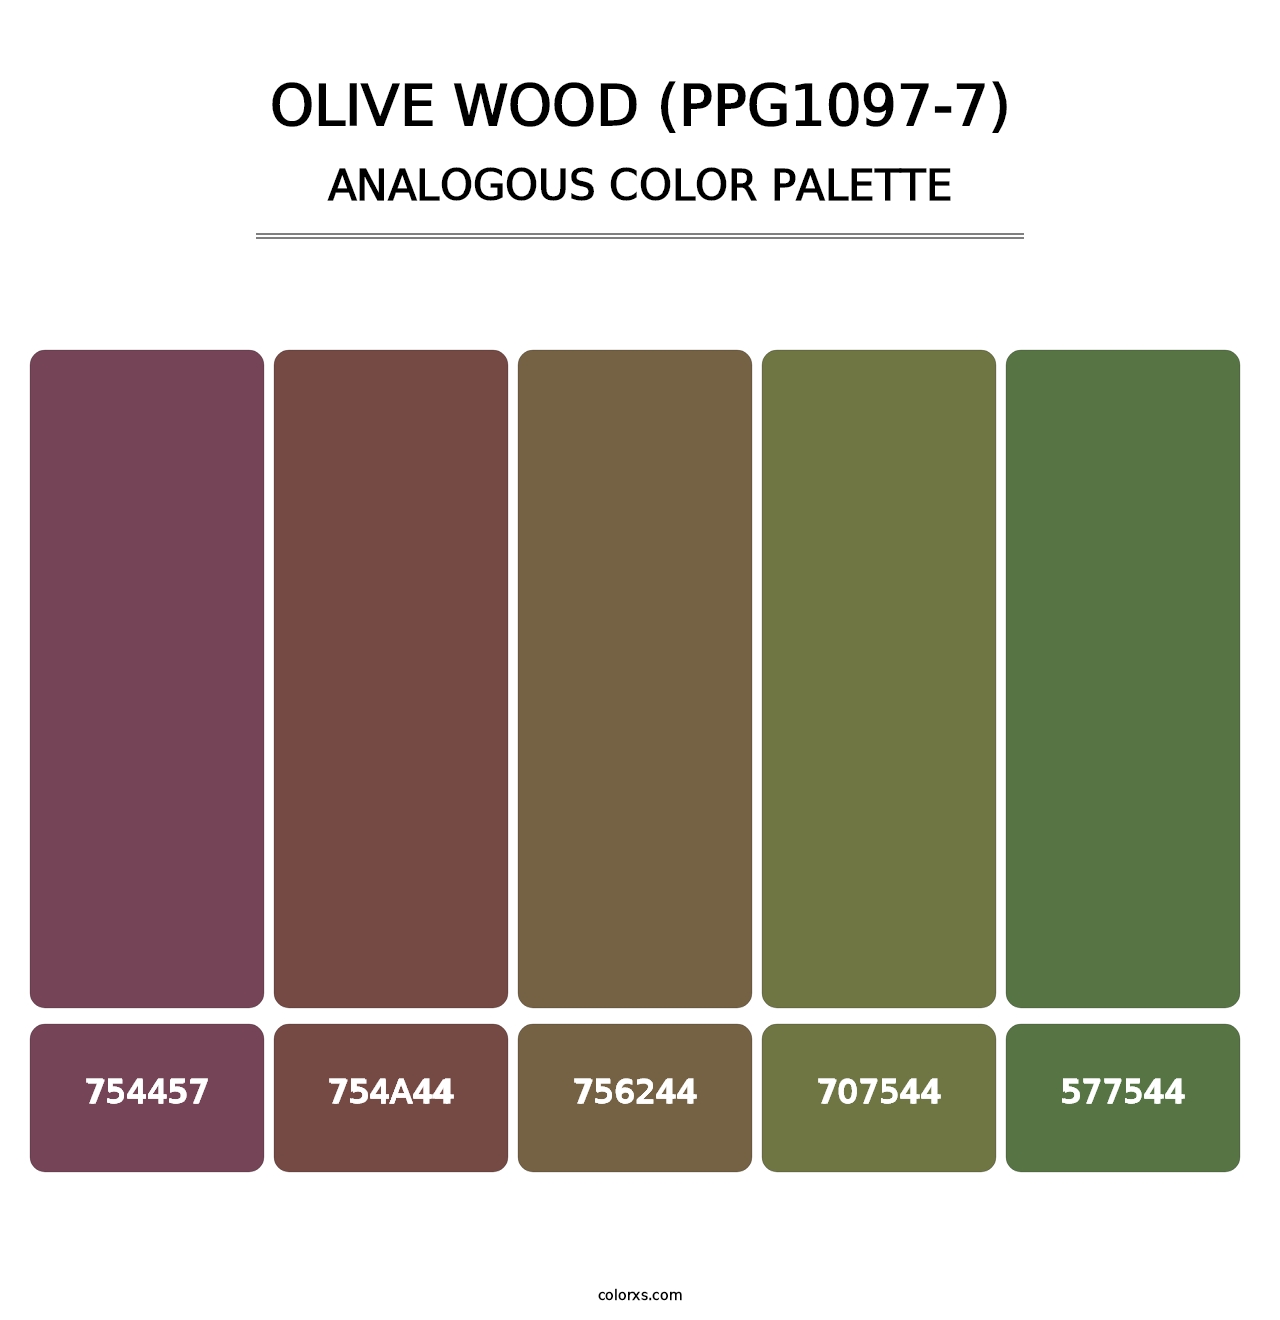 Olive Wood (PPG1097-7) - Analogous Color Palette